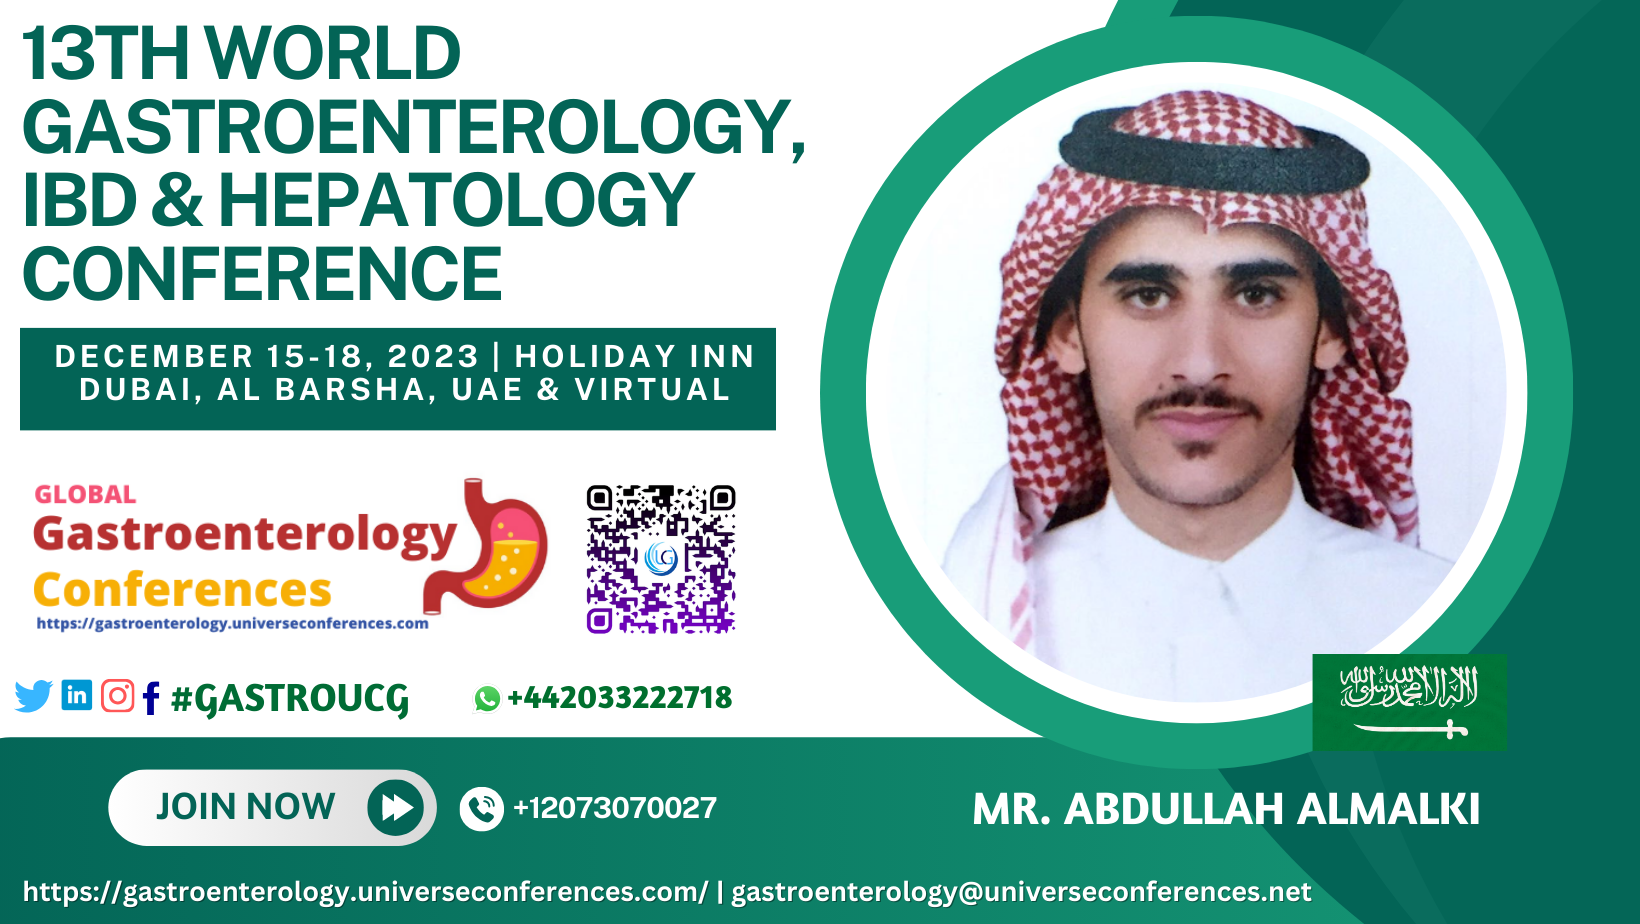 Mr. Abdullah Almalki_13th World Gastroenterology, IBD & Hepatology Conference